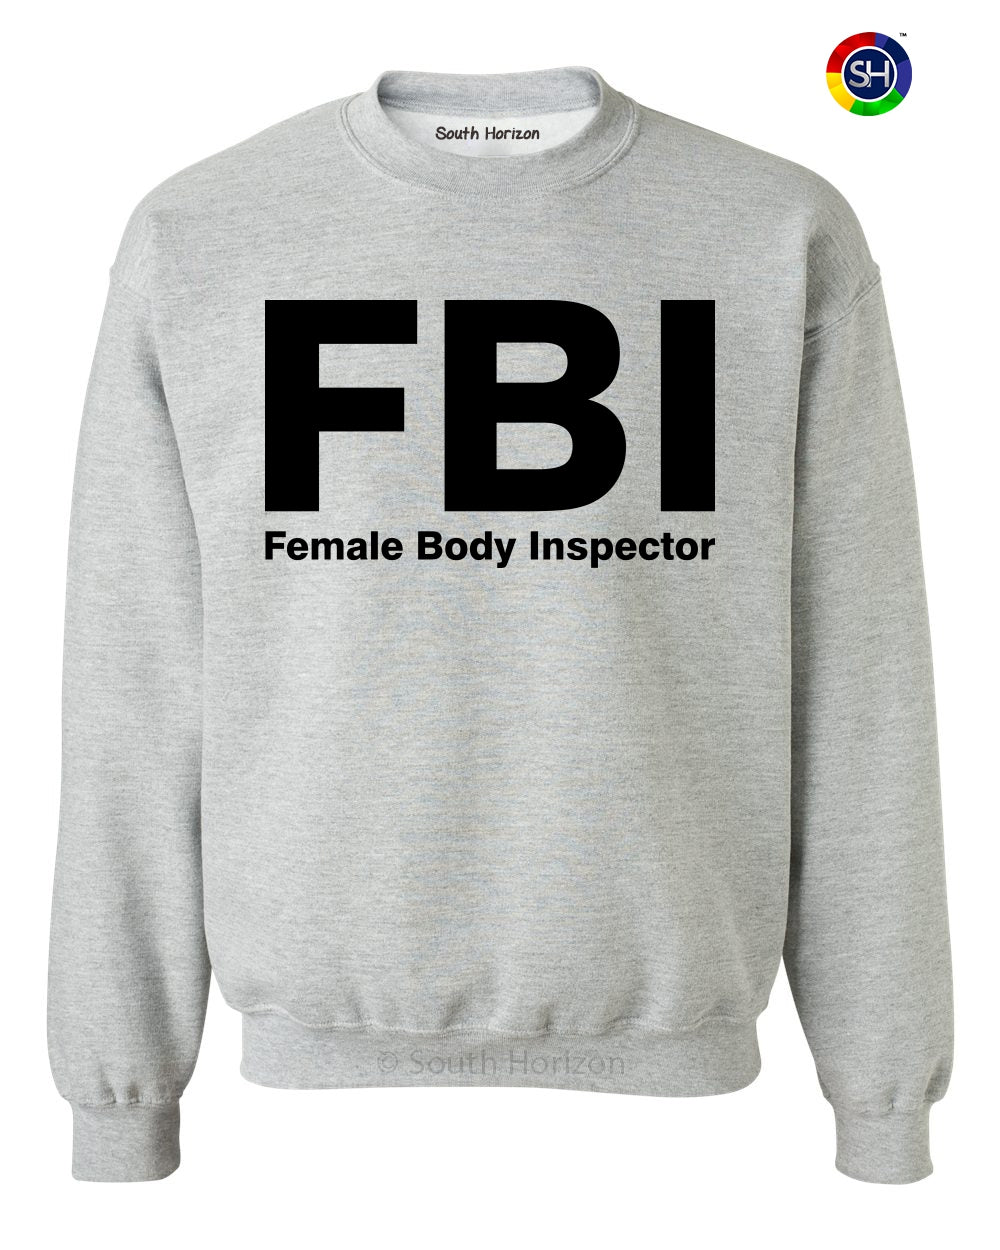 FBI - Female Body Inspector on SweatShirt (#16-11)